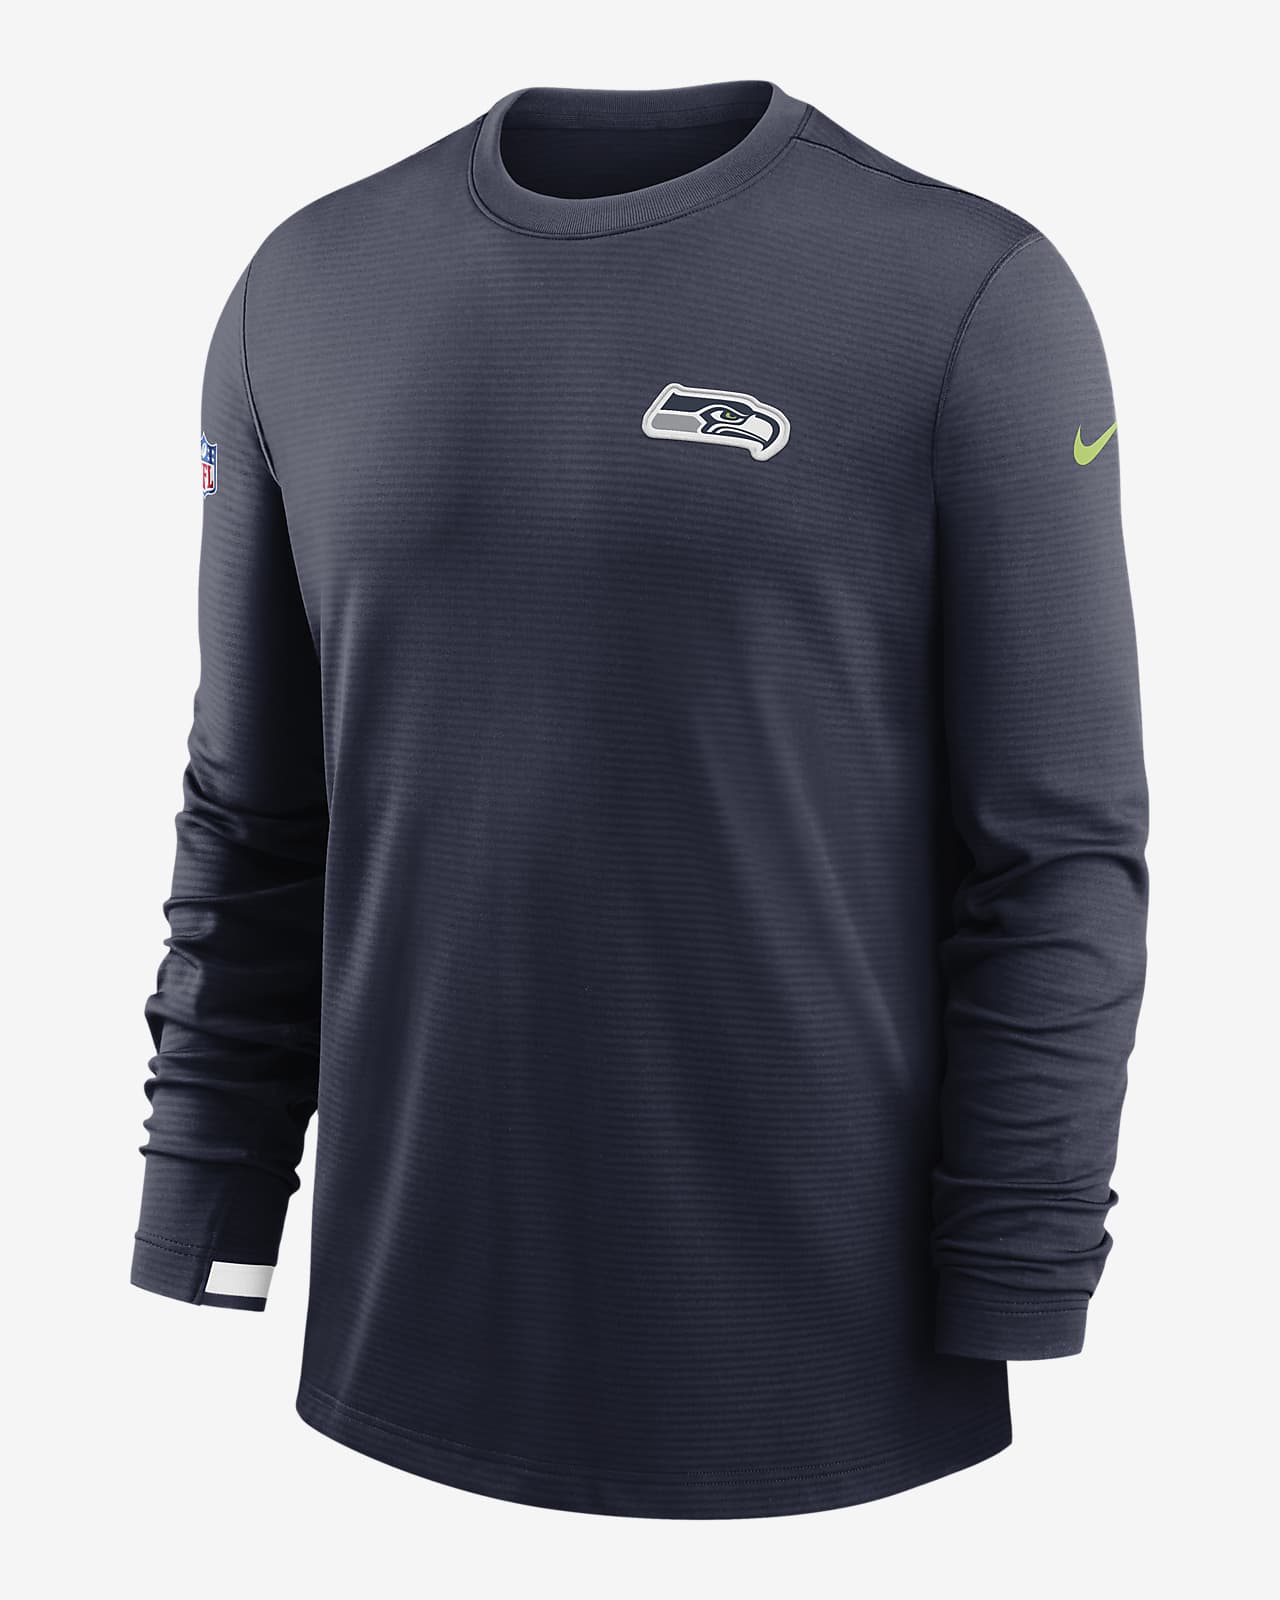 Nike Dri-FIT (NFL Seahawks) Men's Long 